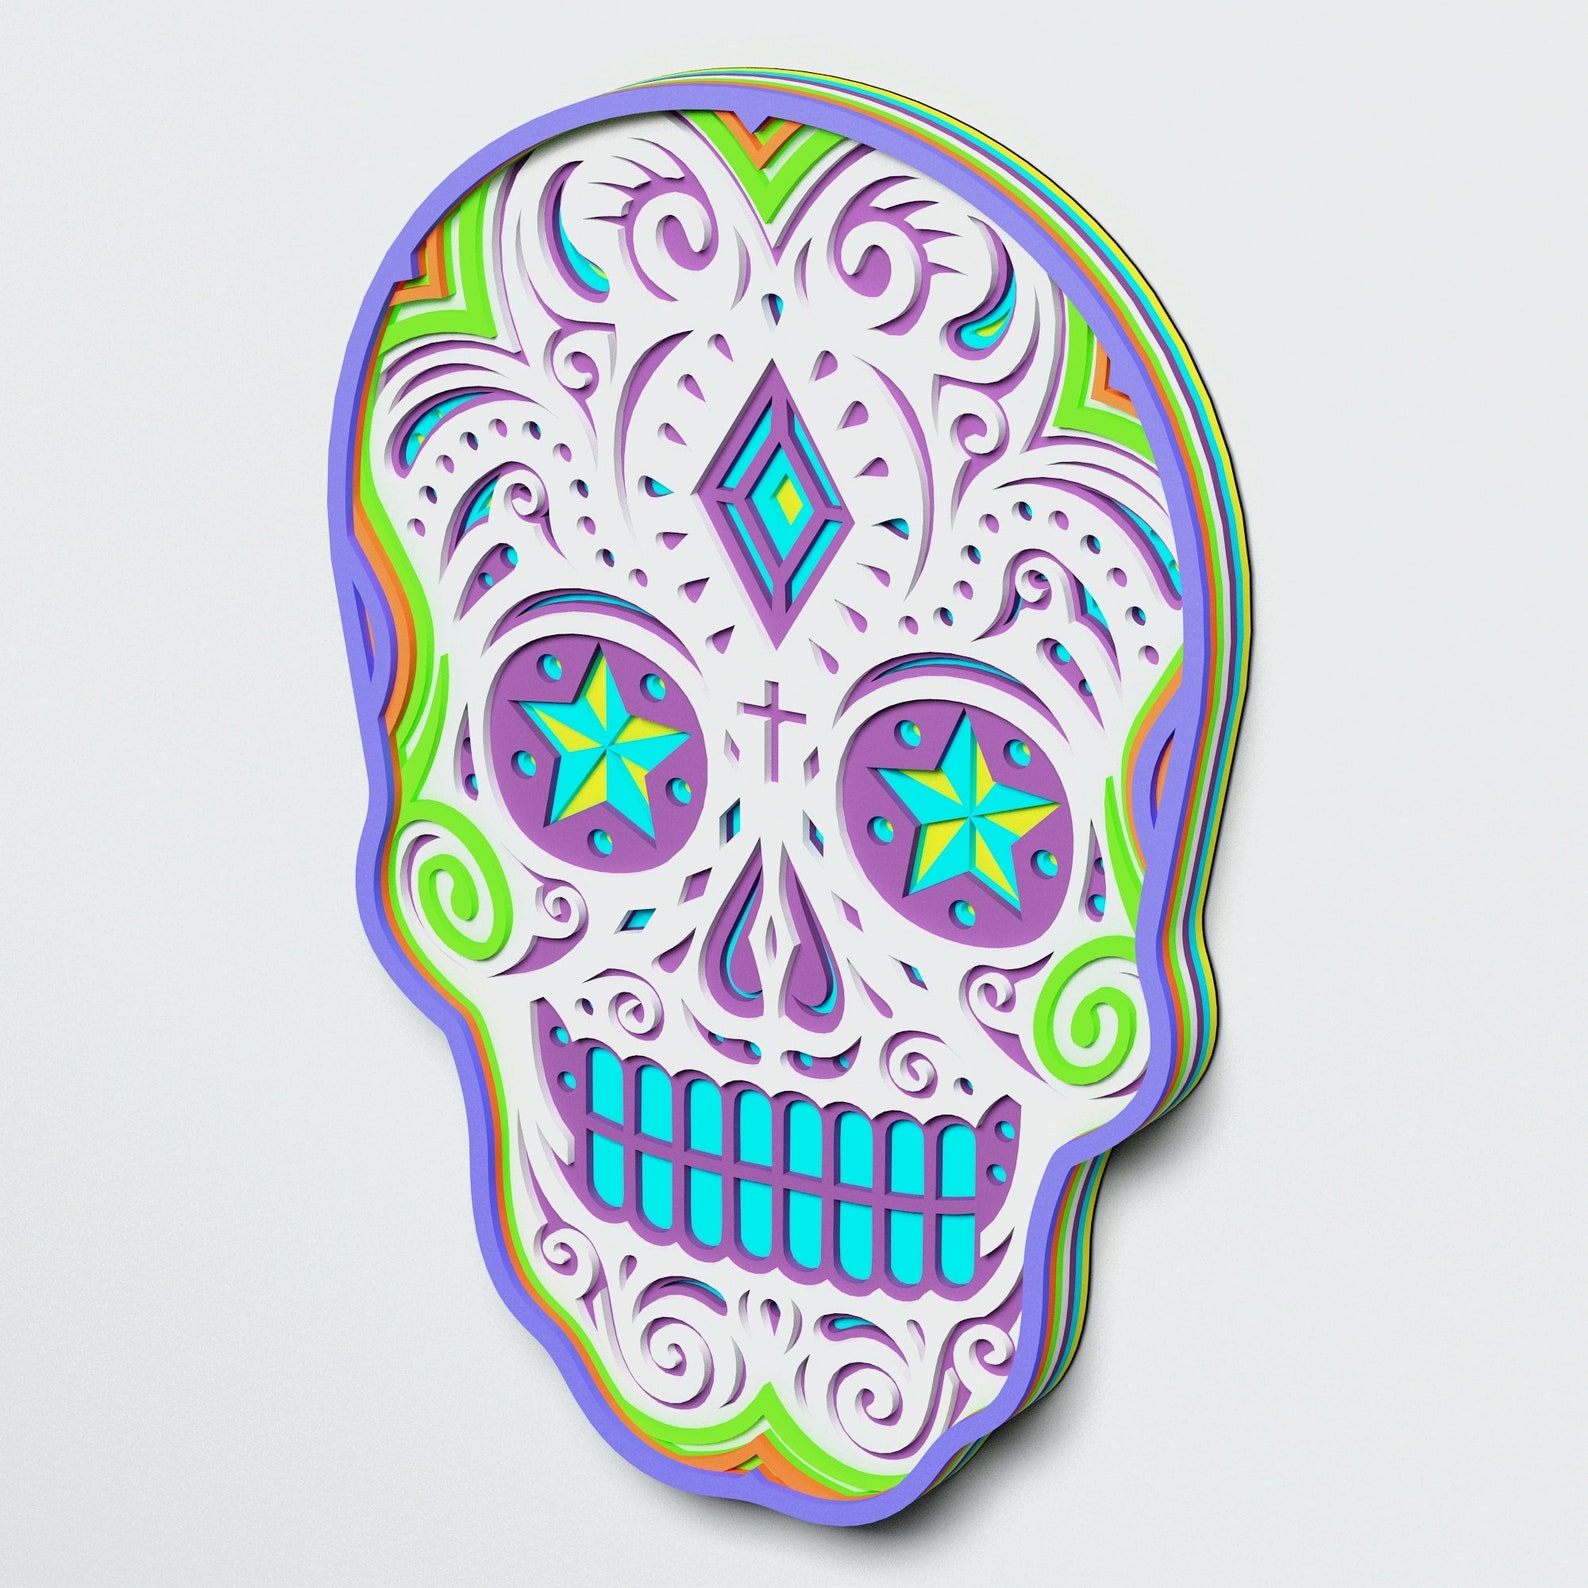 Download Multilayer Sugar Skull Mandala S6 DXF SVG Vector Mexican ...